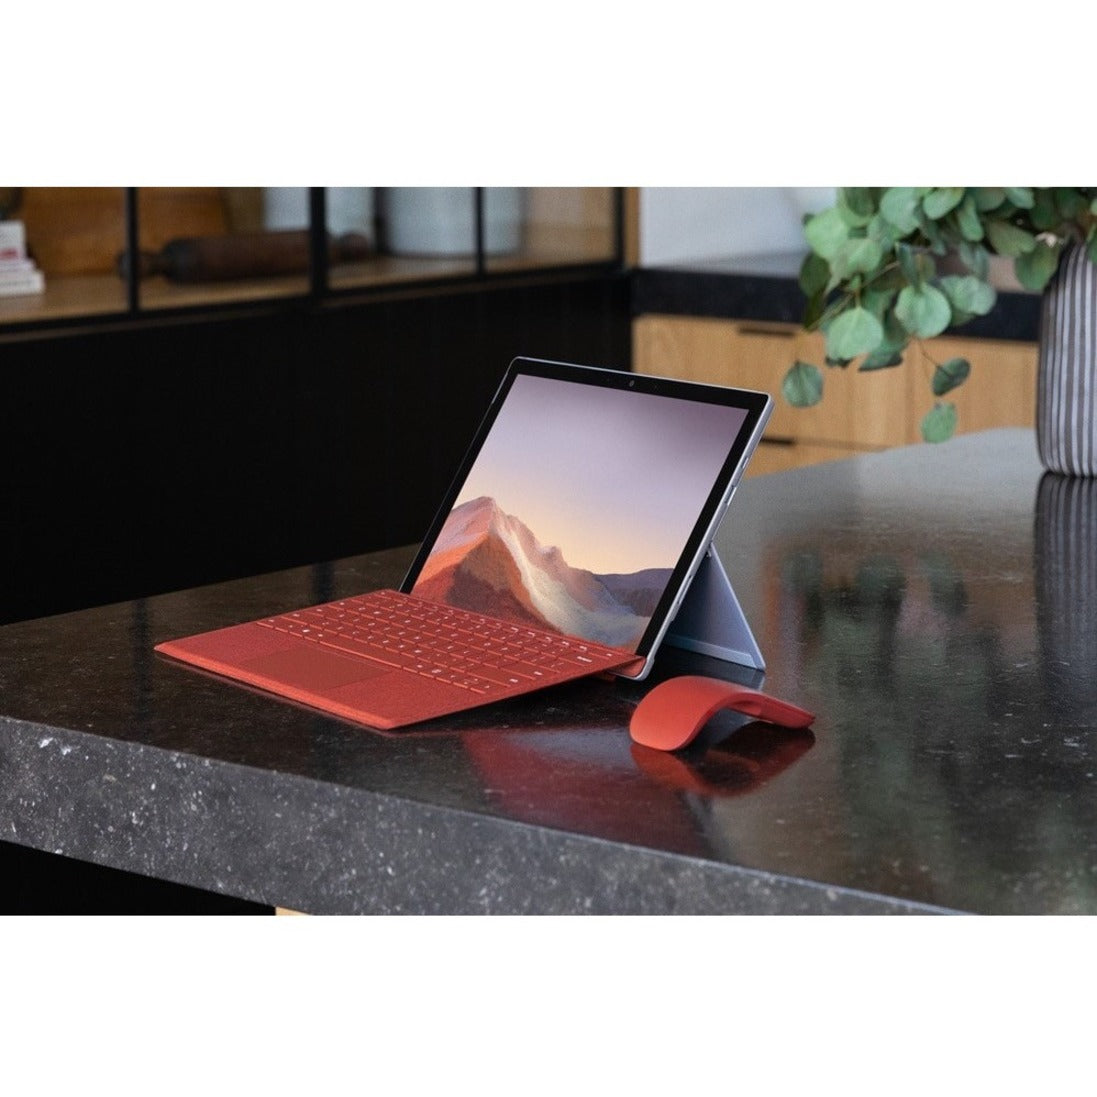 Microsoft KCT-00061 Surface Go Typabdeckung - Englisch Mohnrot Alcantara Tastatur/Abdeckung Fall